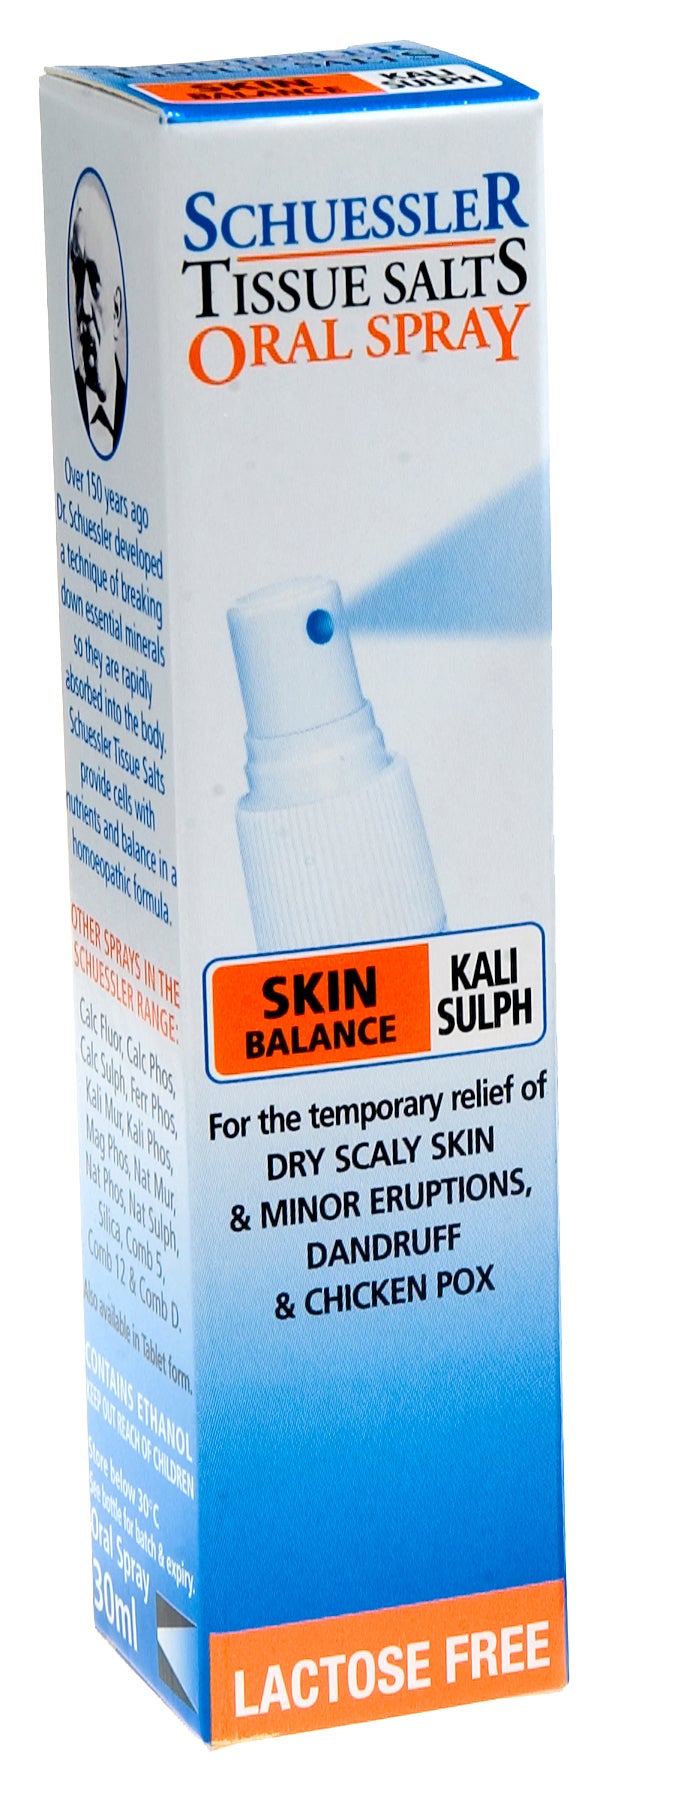 Schuessler Tissue Salts 30ML Spray - Kali Sulph - No 7 - Lactose Free